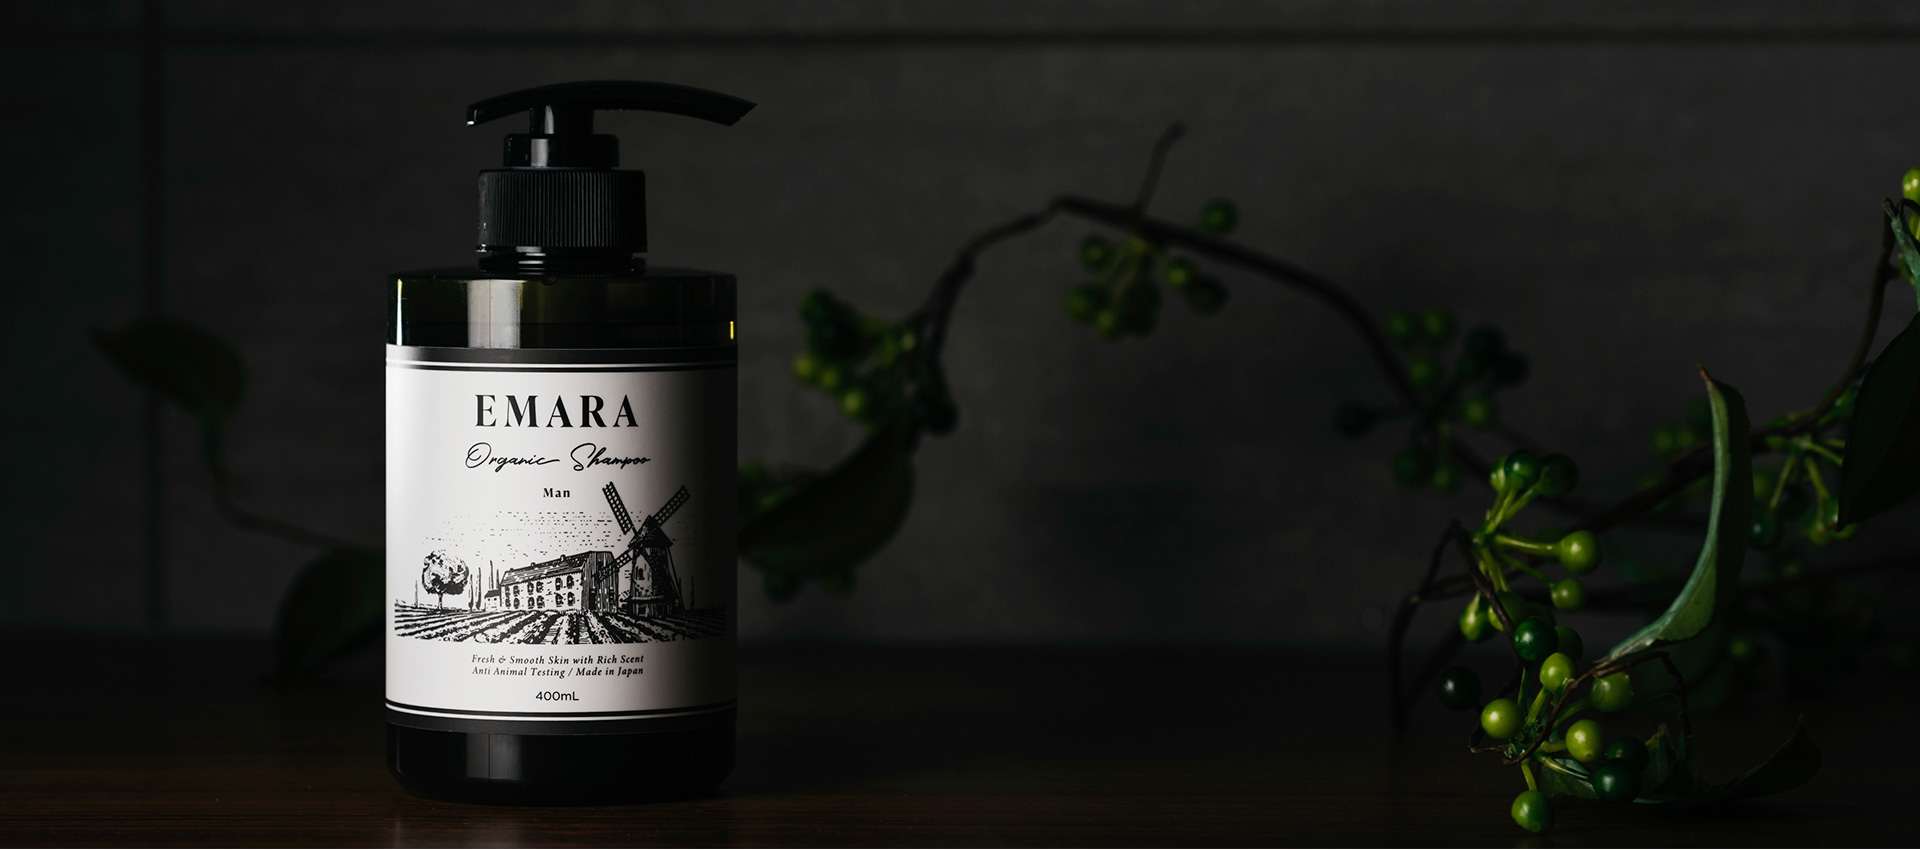 EMARA Organic Shampoo for Man